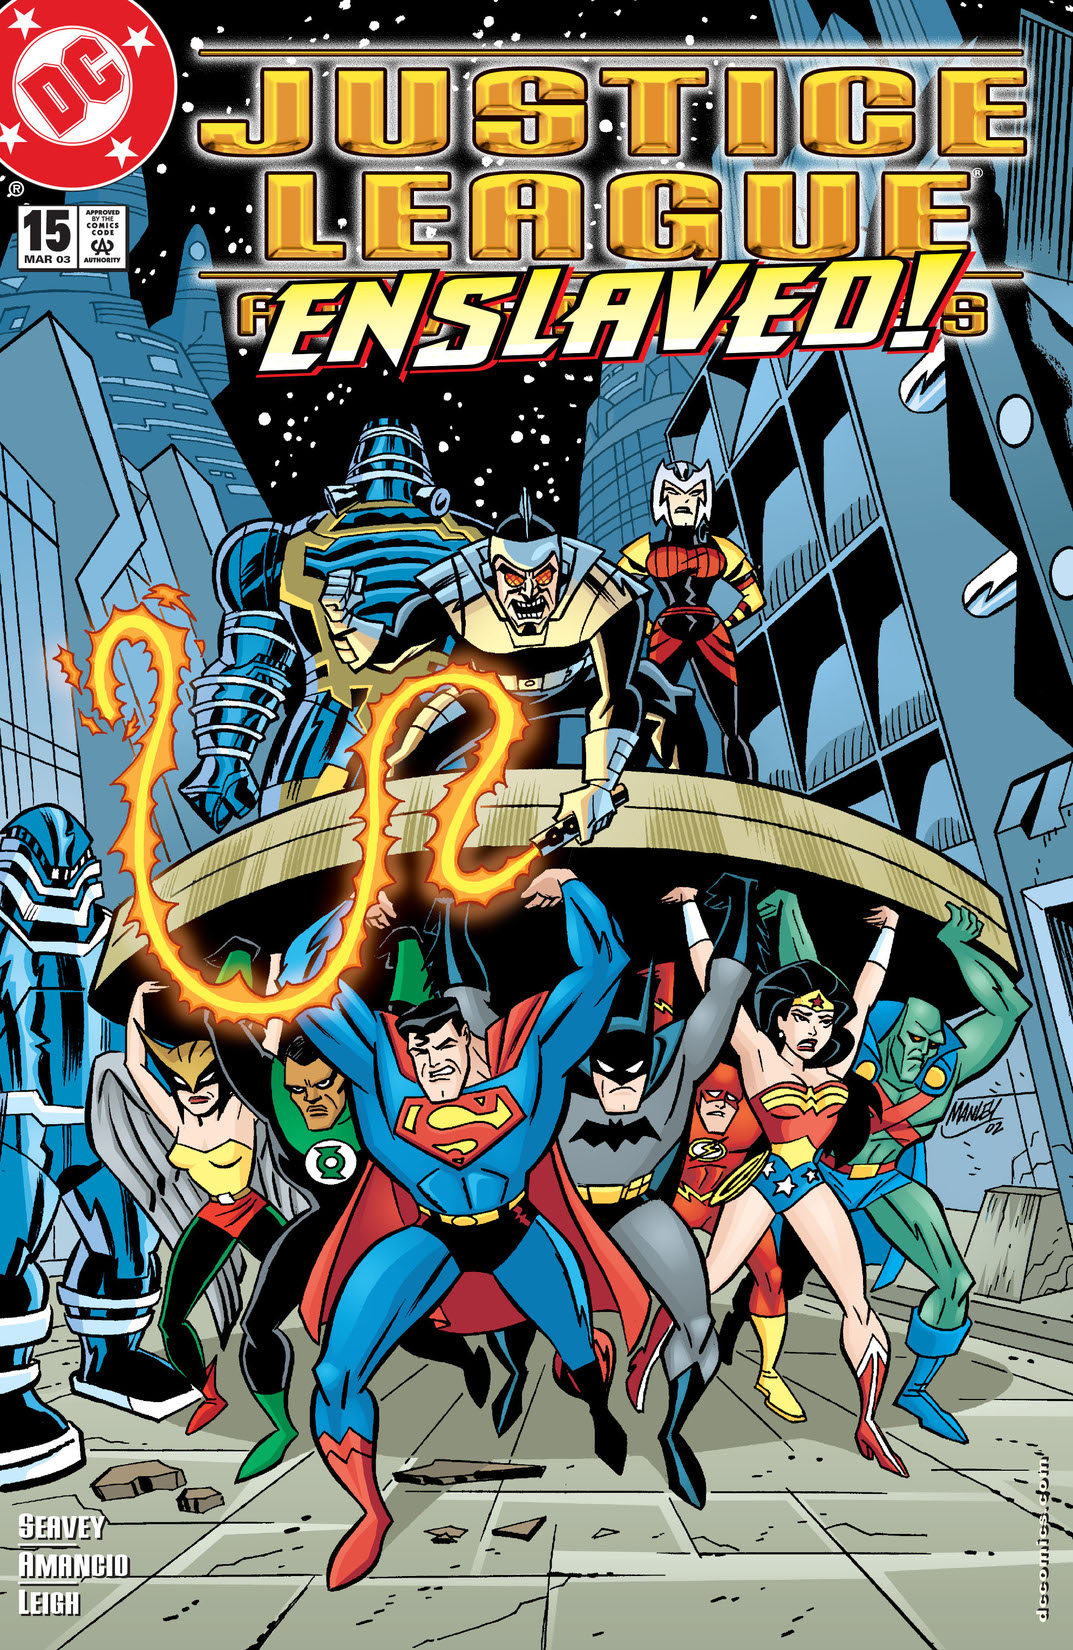 Justice League Adventures #15 preview images